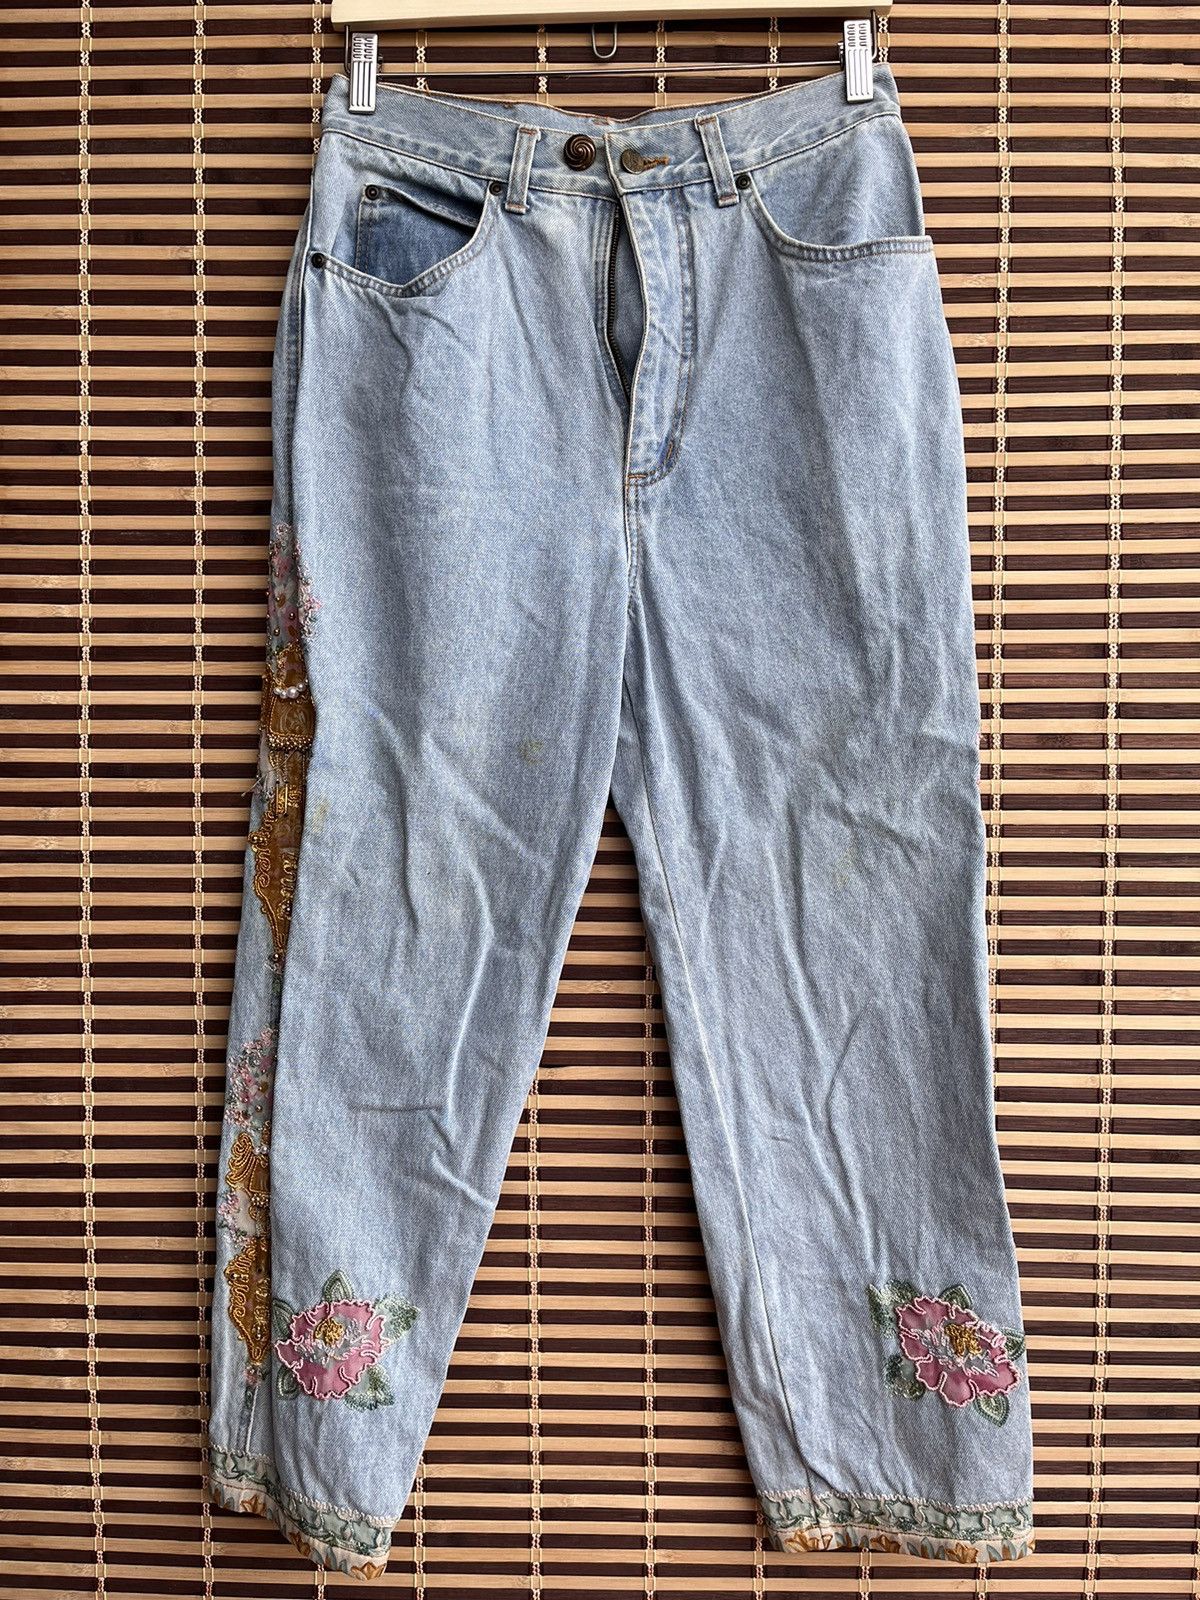 Vintage Steal 🔥 Oppio Italian Denim Jeans - 20